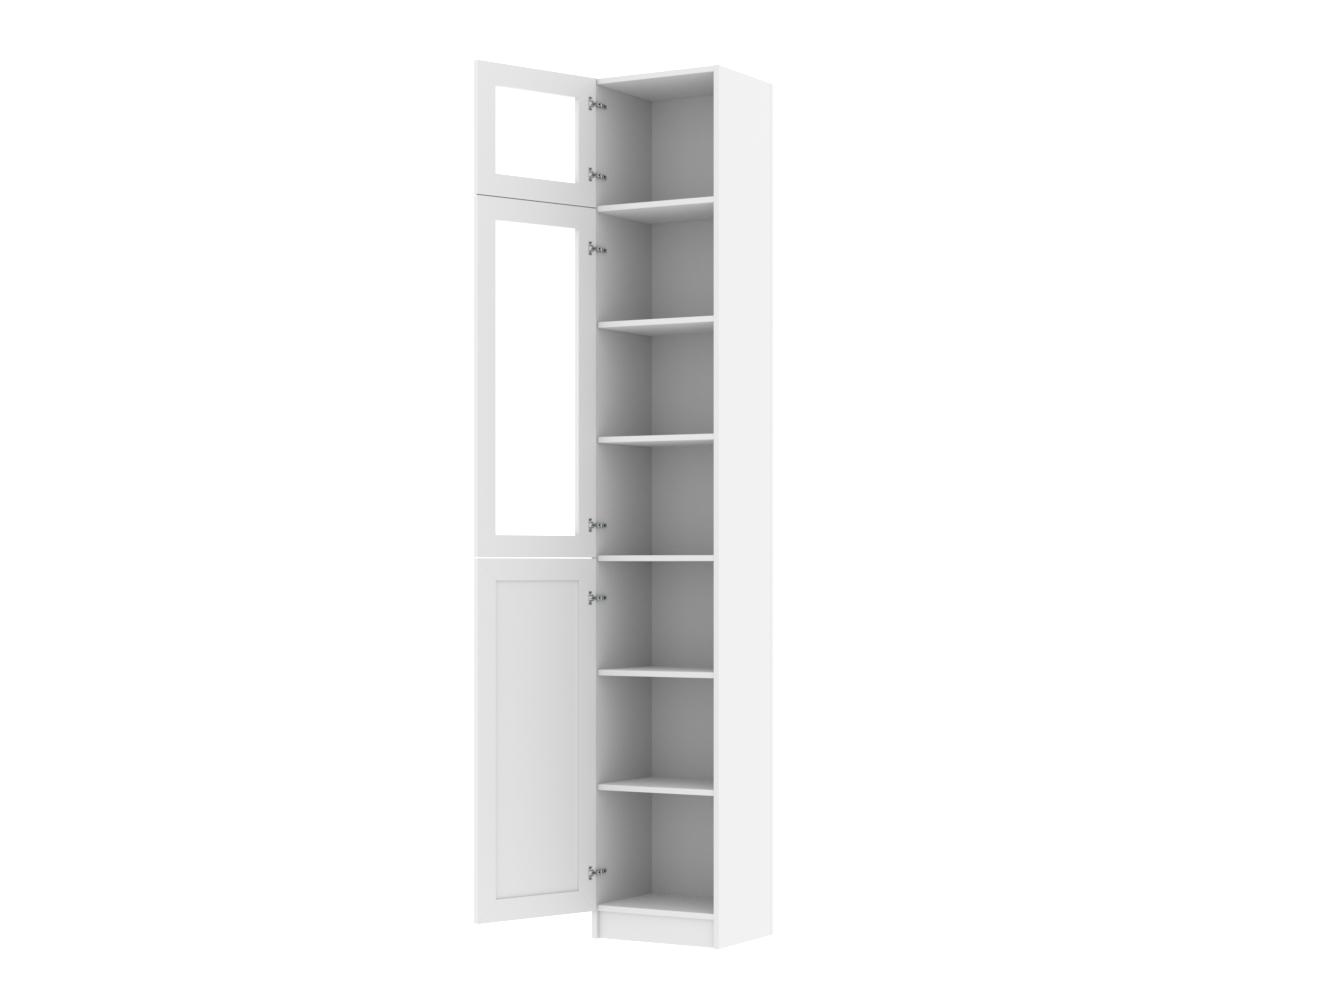  Книжный шкаф Билли 356 white ИКЕА (IKEA) изображение товара